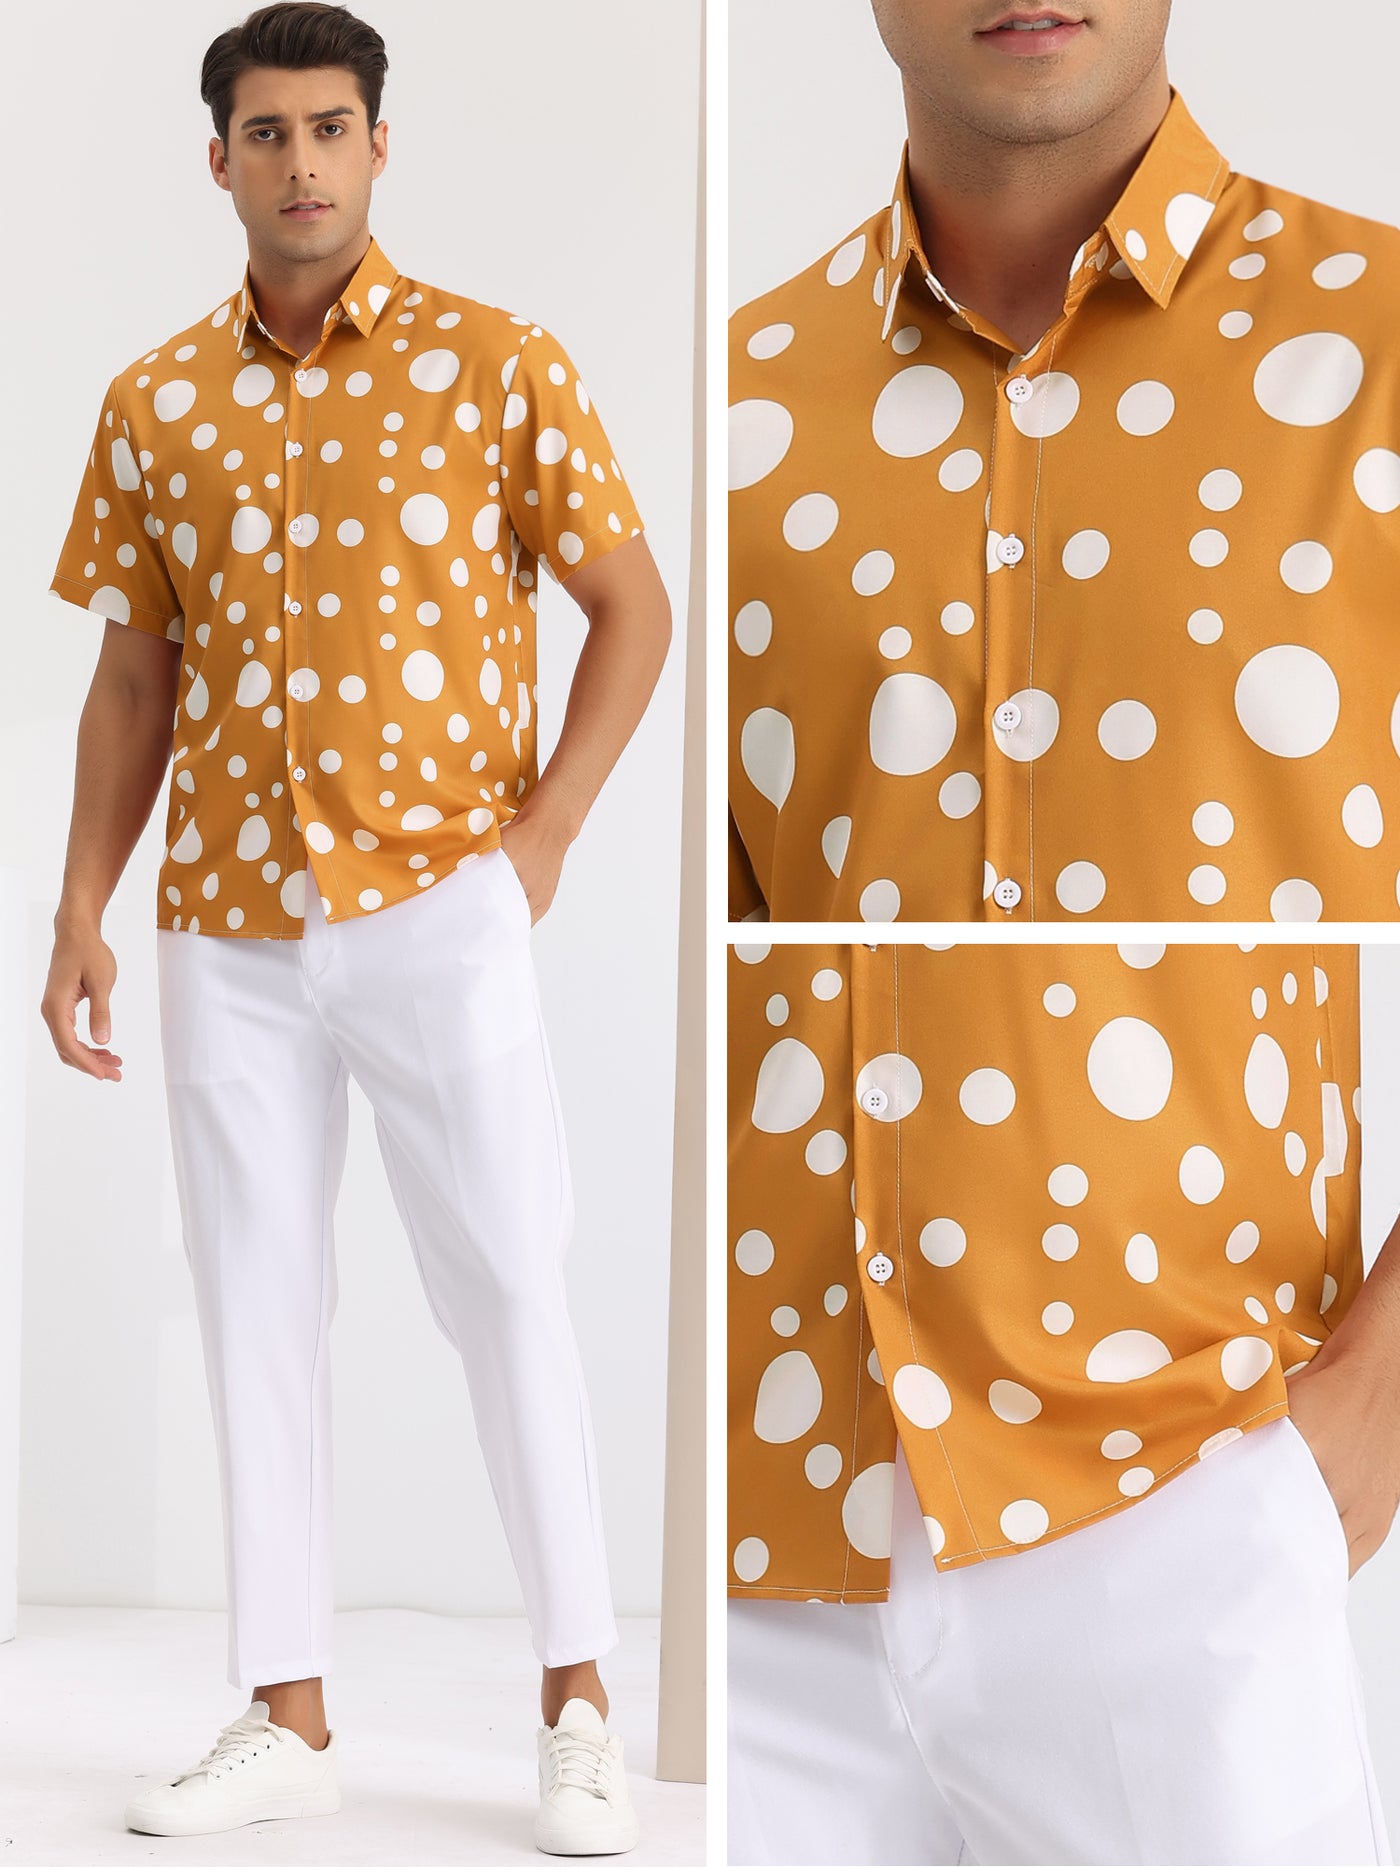 Bublédon Polka Dots Shirts for Men's Summer Contrasting Color Short Sleeves Button Down Shirt